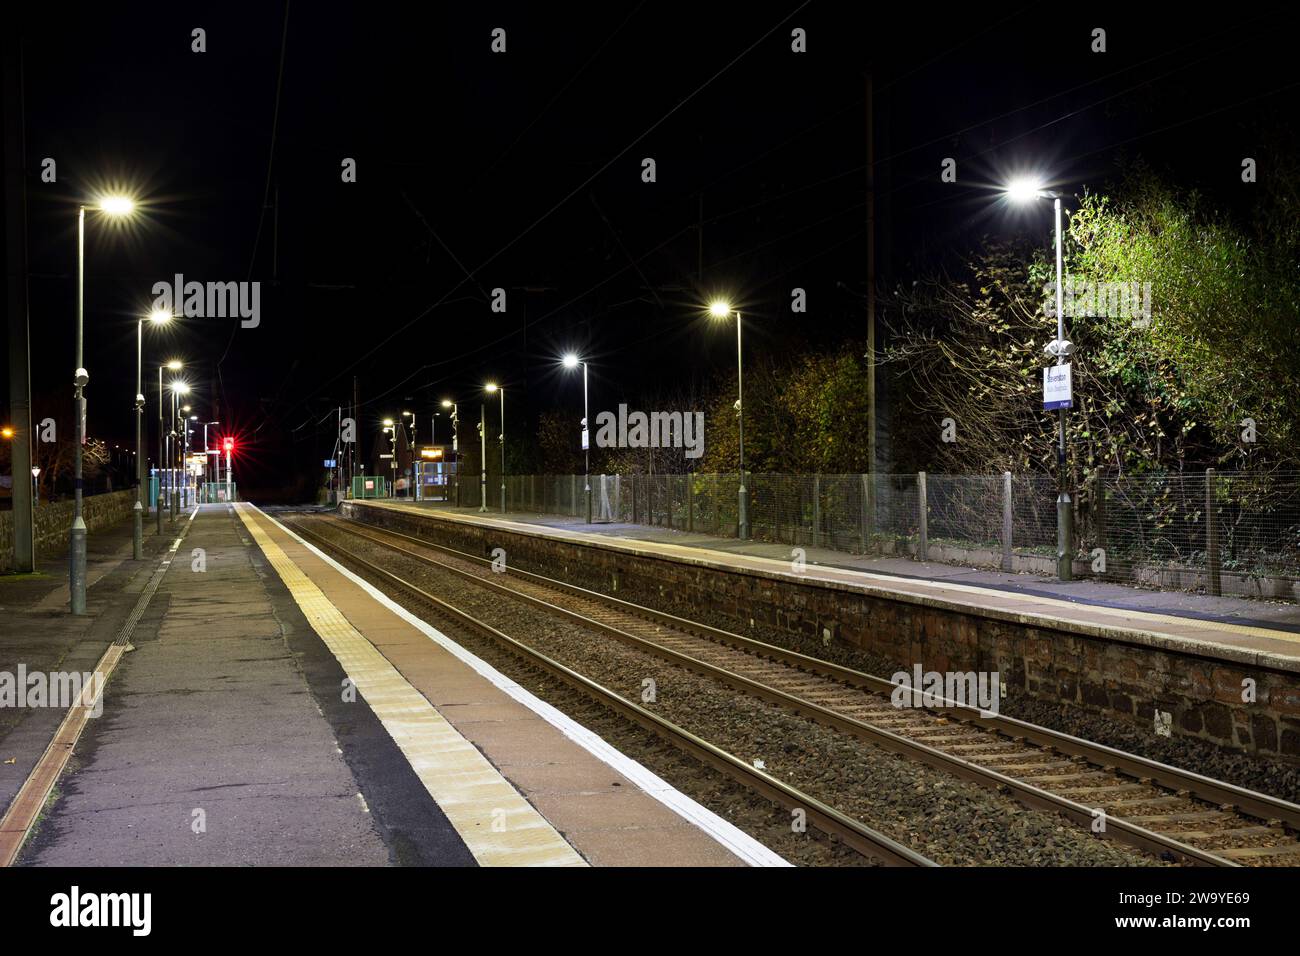 Stevenston railway station (Ayrshire) Scotland UK without passengers or any people at night. Stock Photo